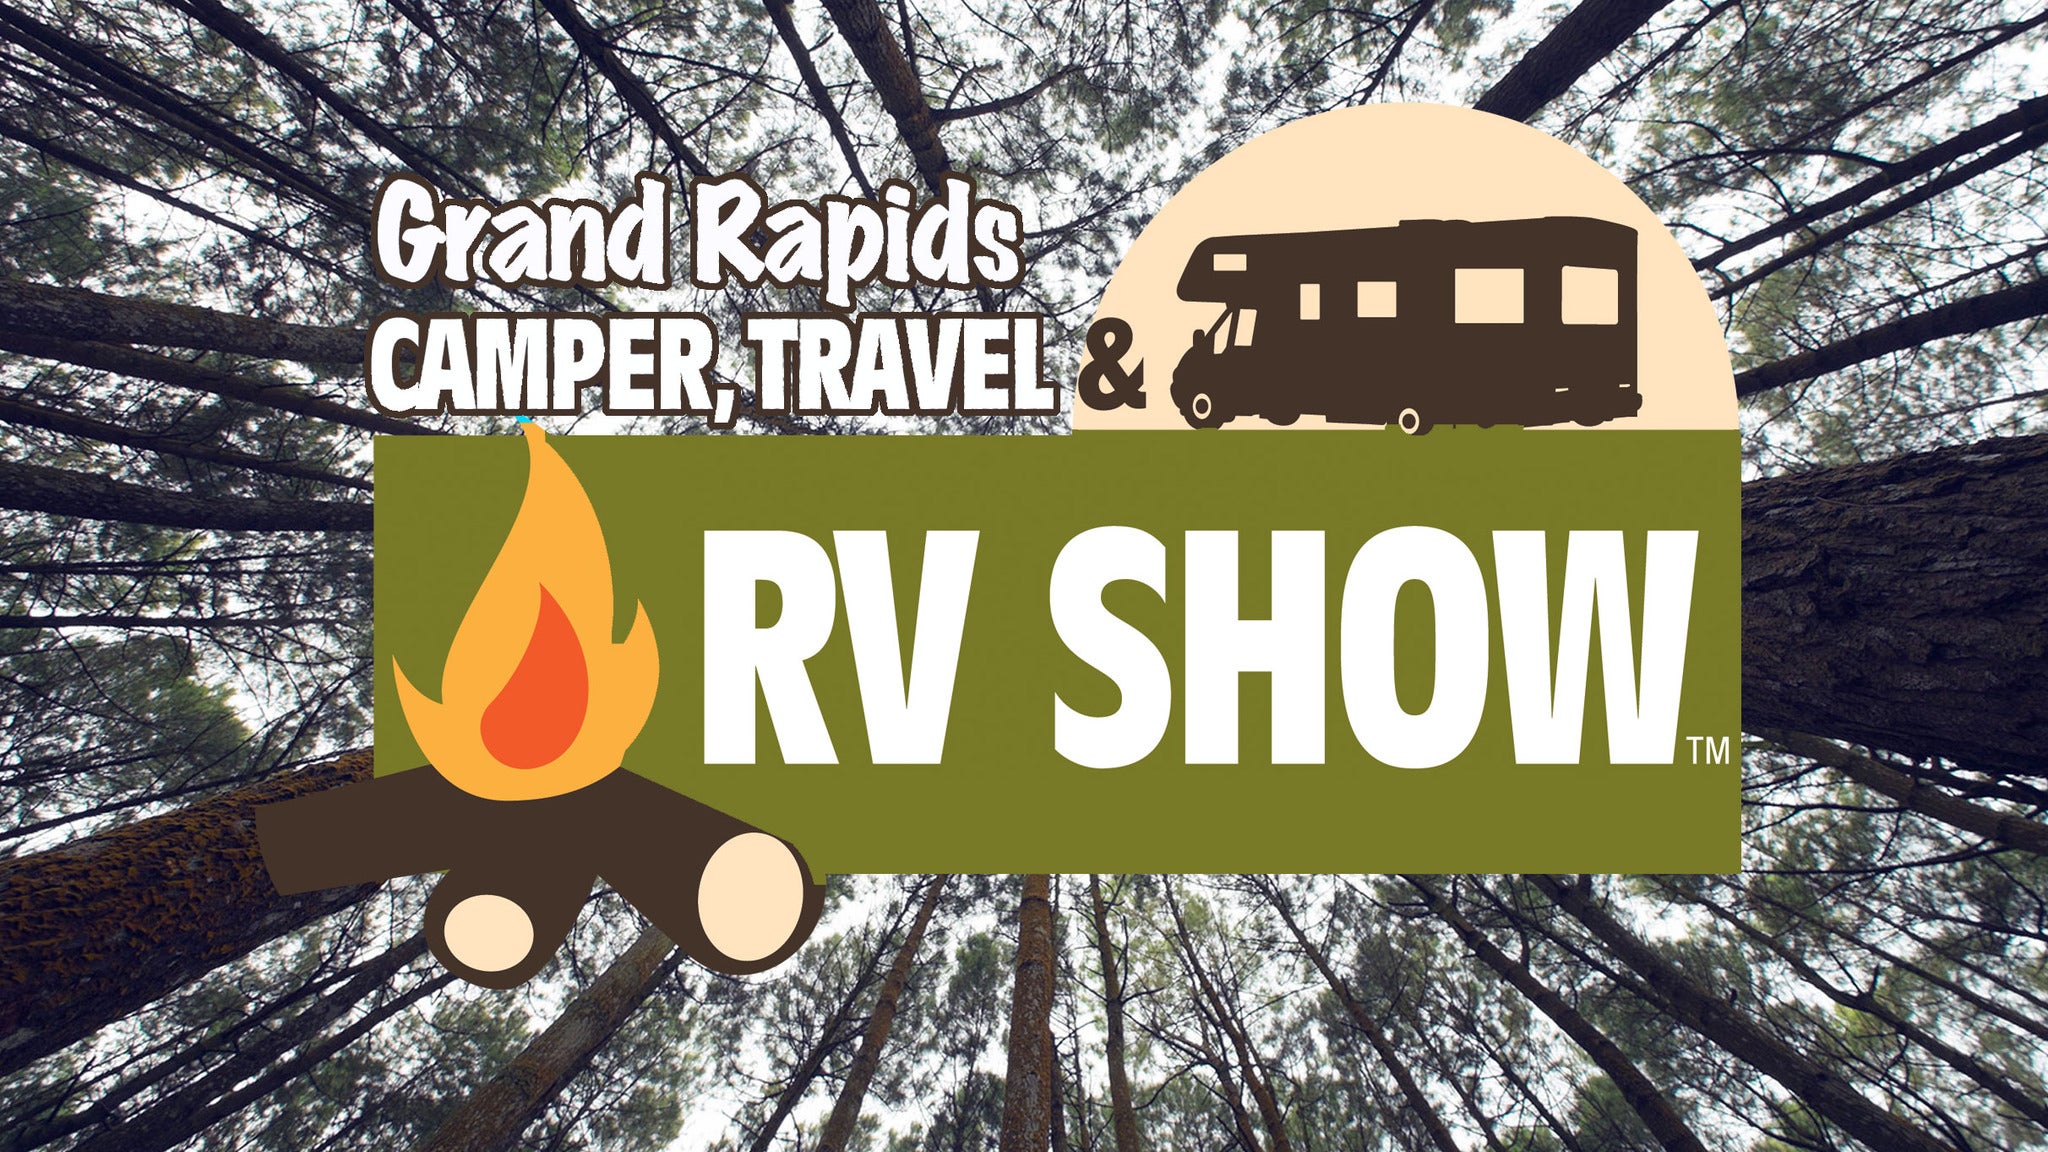 Grand Rapids Camper, Travel & RV Show Tickets Event Dates & Schedule